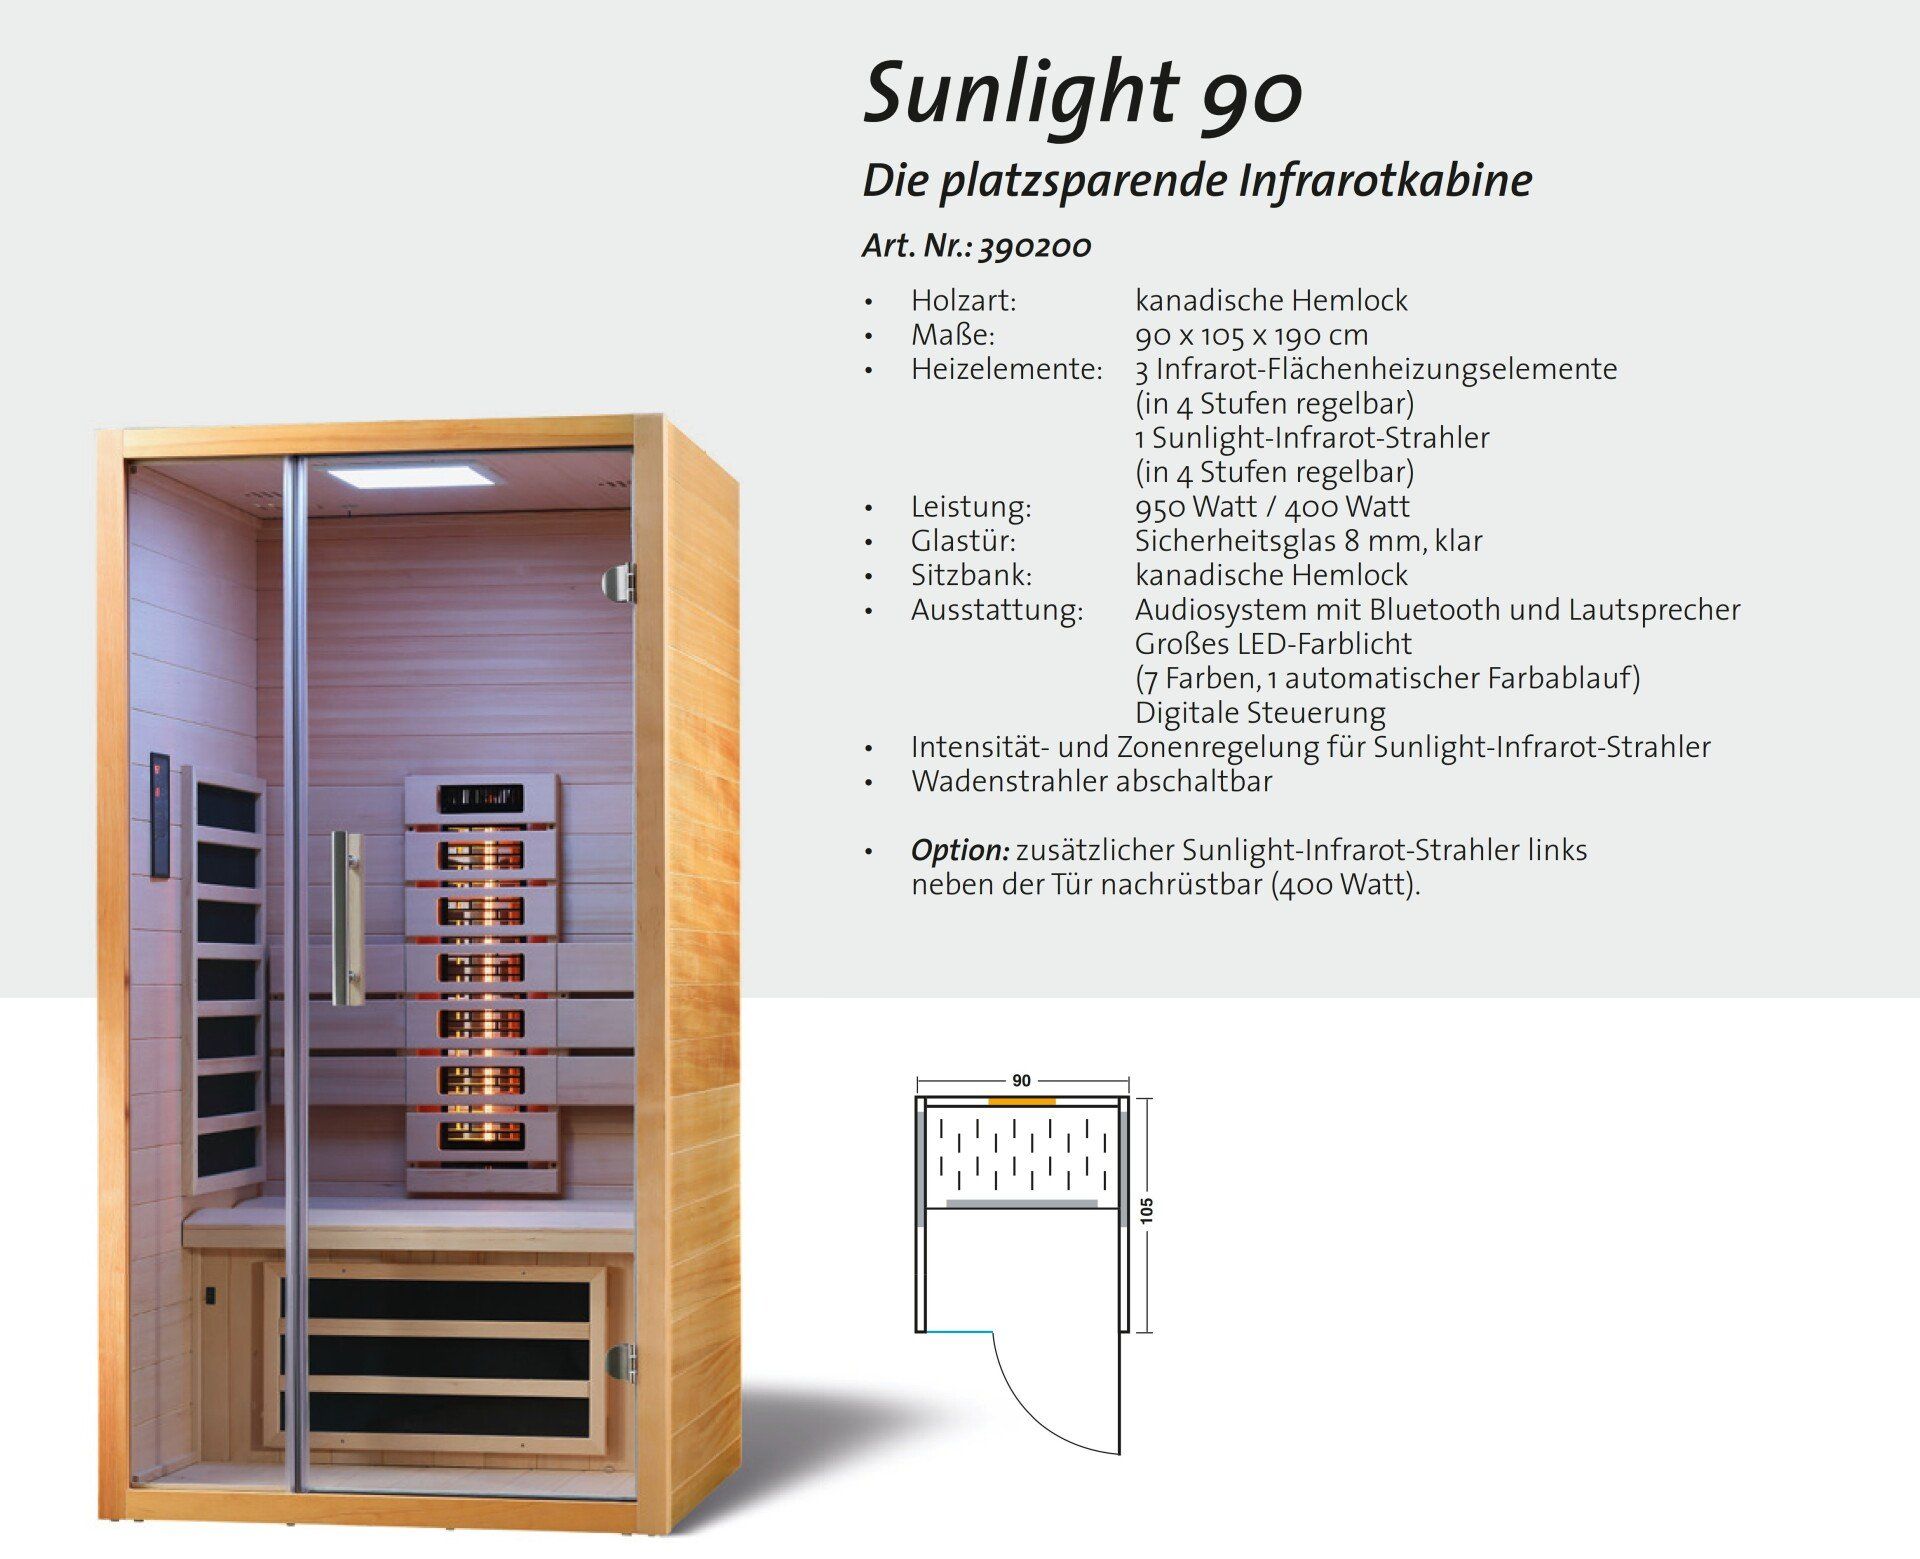 Datenblatt Sunlight90 VitalHome Infrarot-Wärmekabine